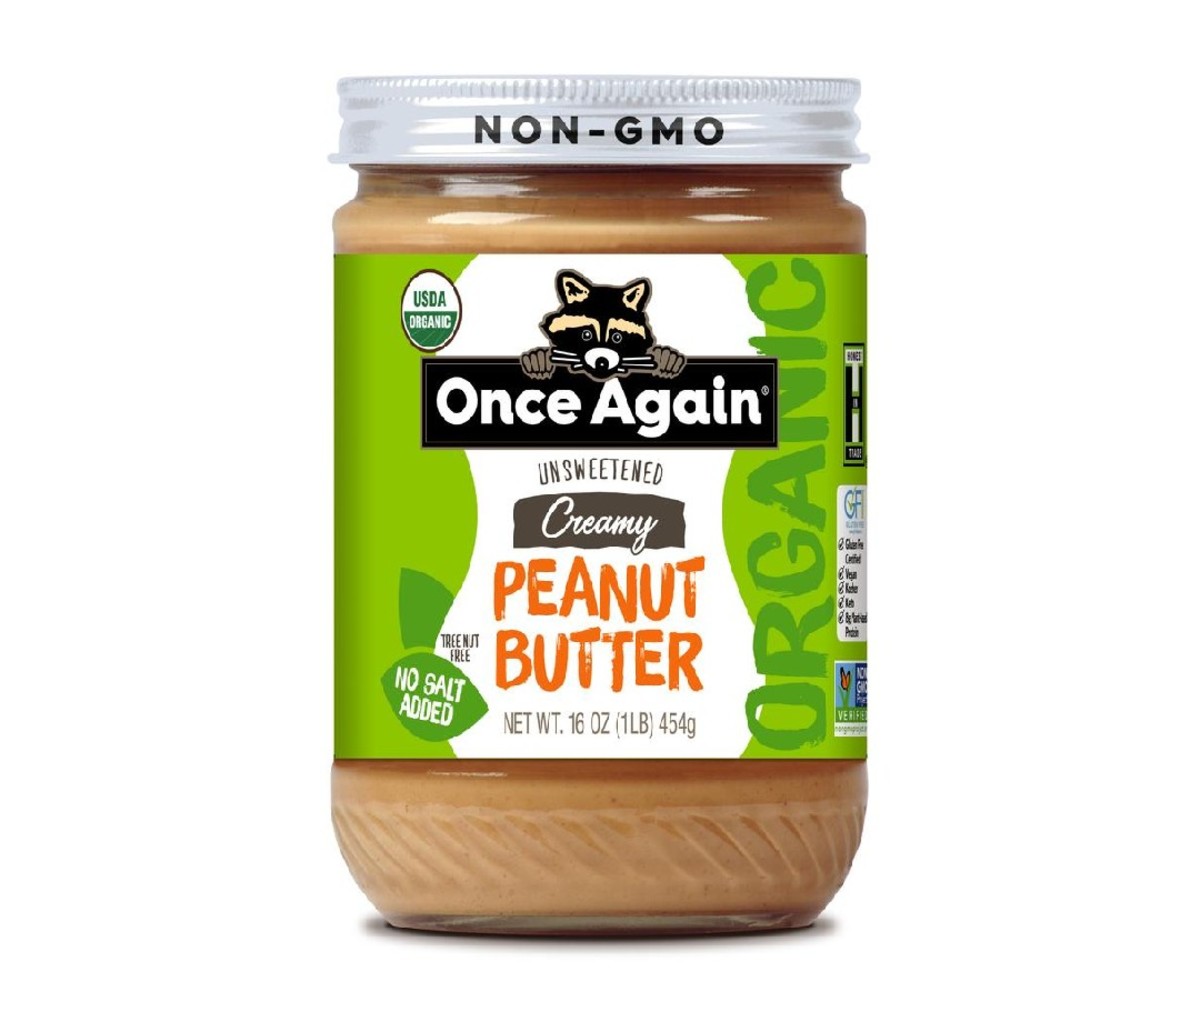 Organic creamy peanut butter again